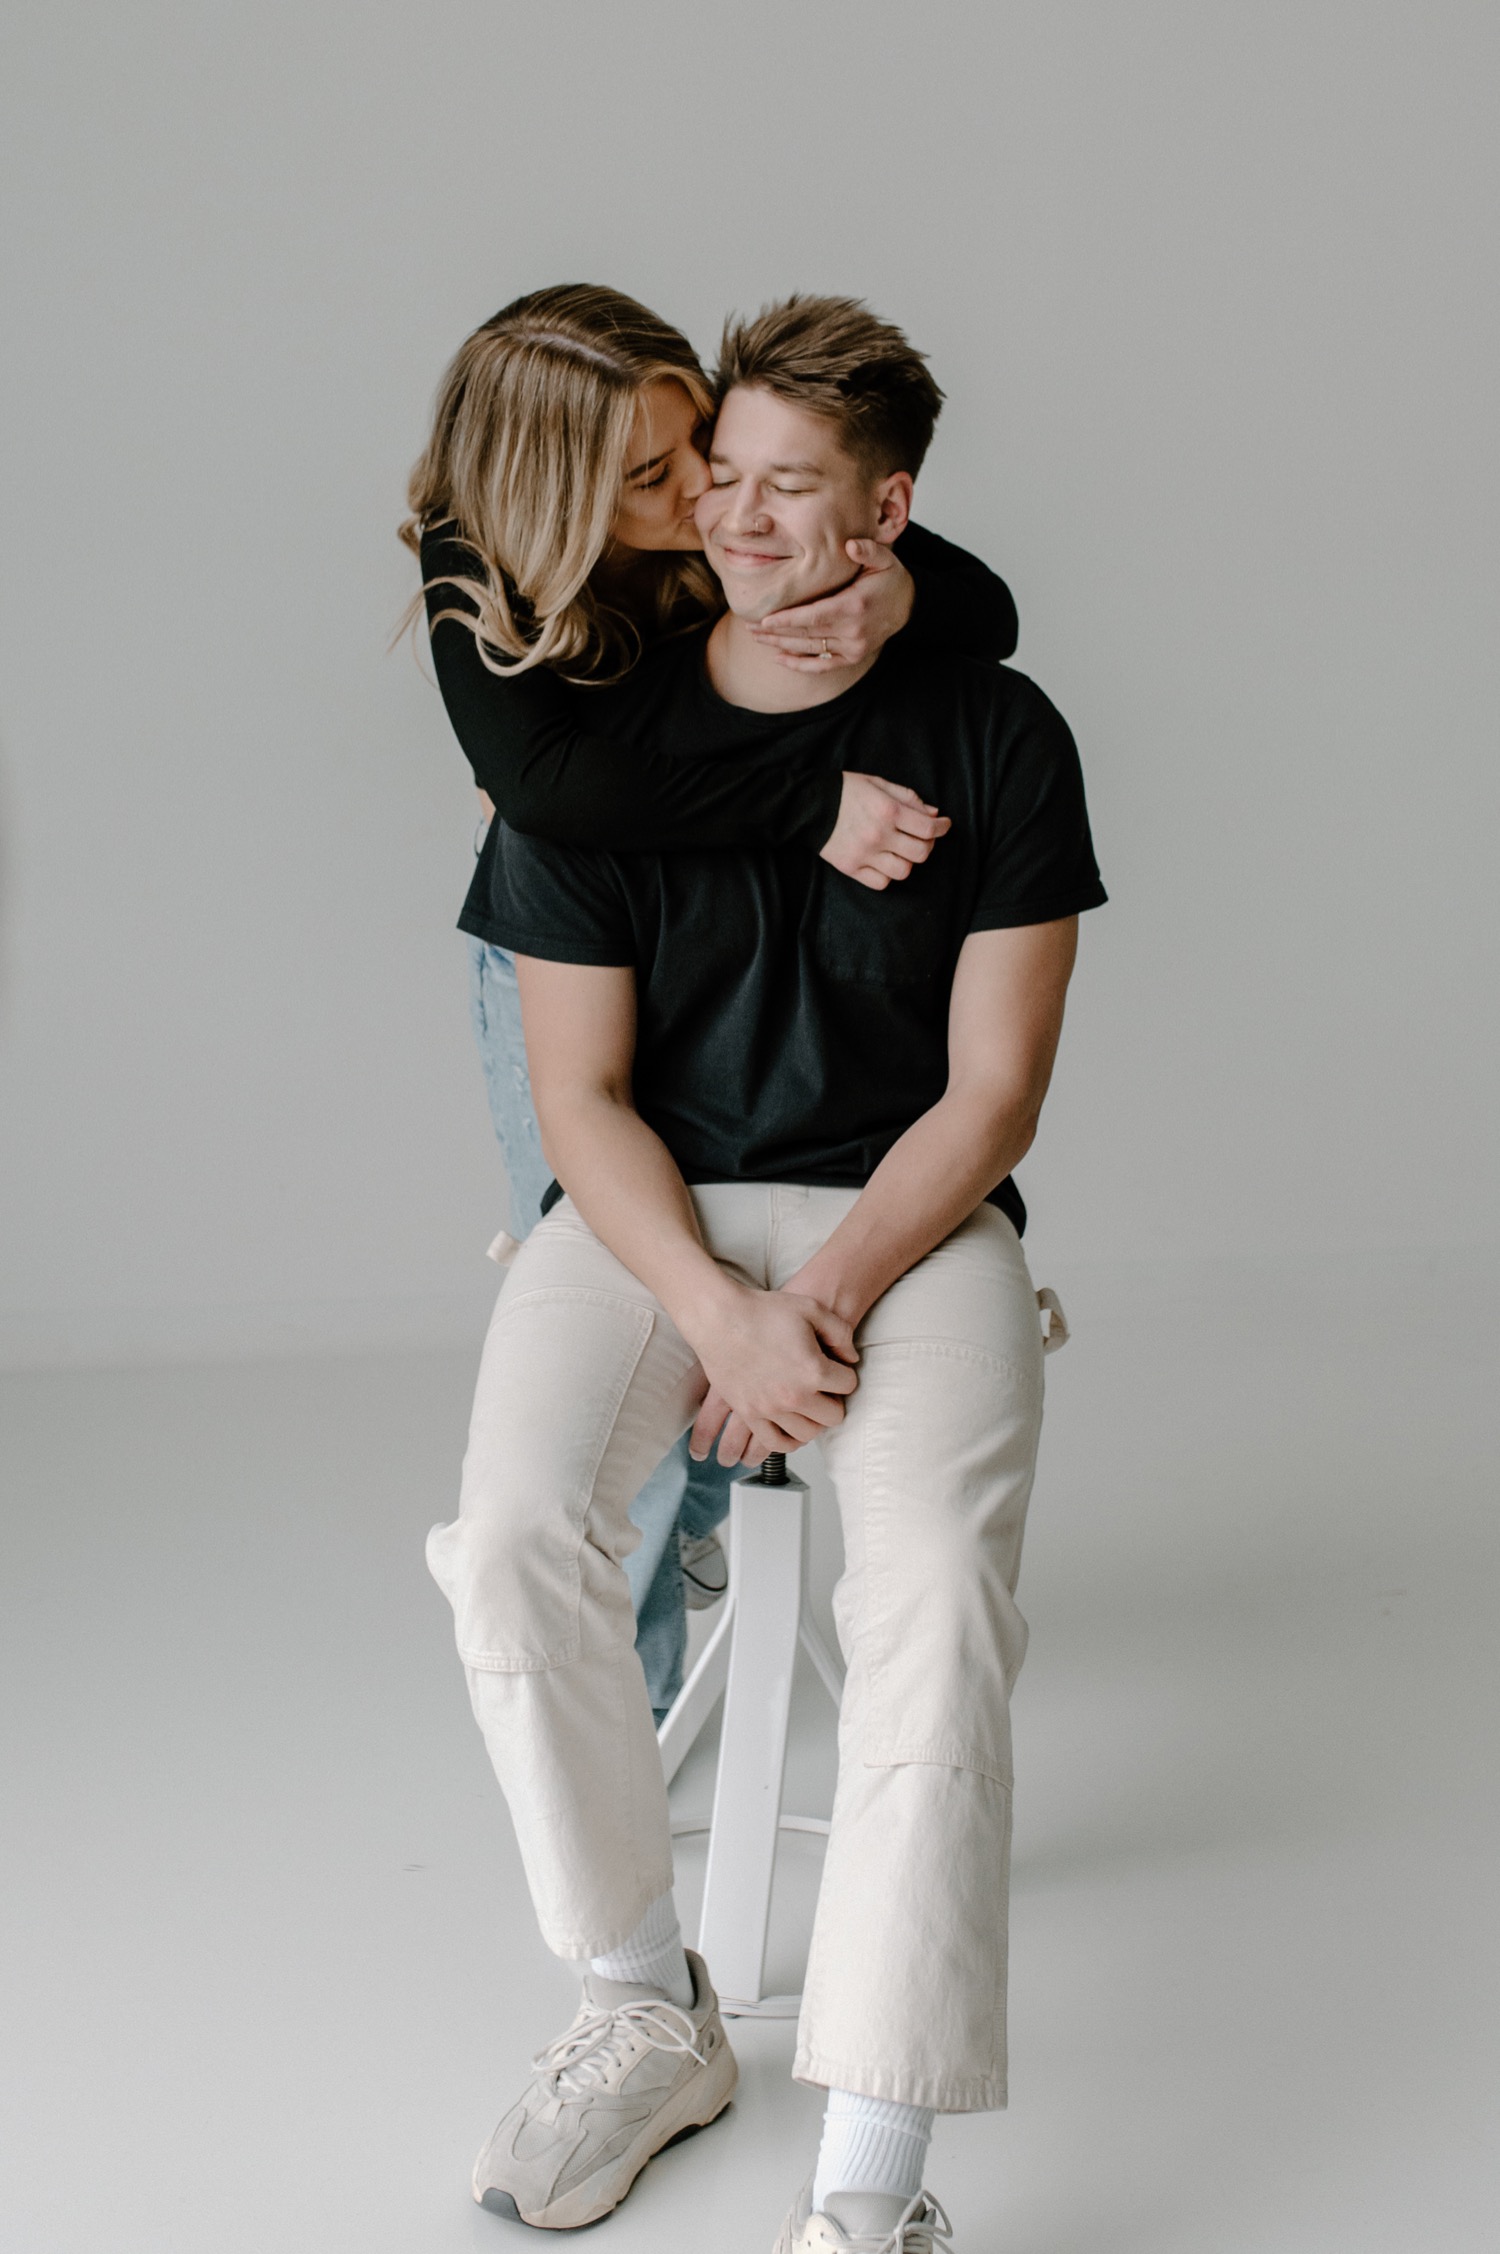 Premium Photo | Full shot cute couple posing together in studio